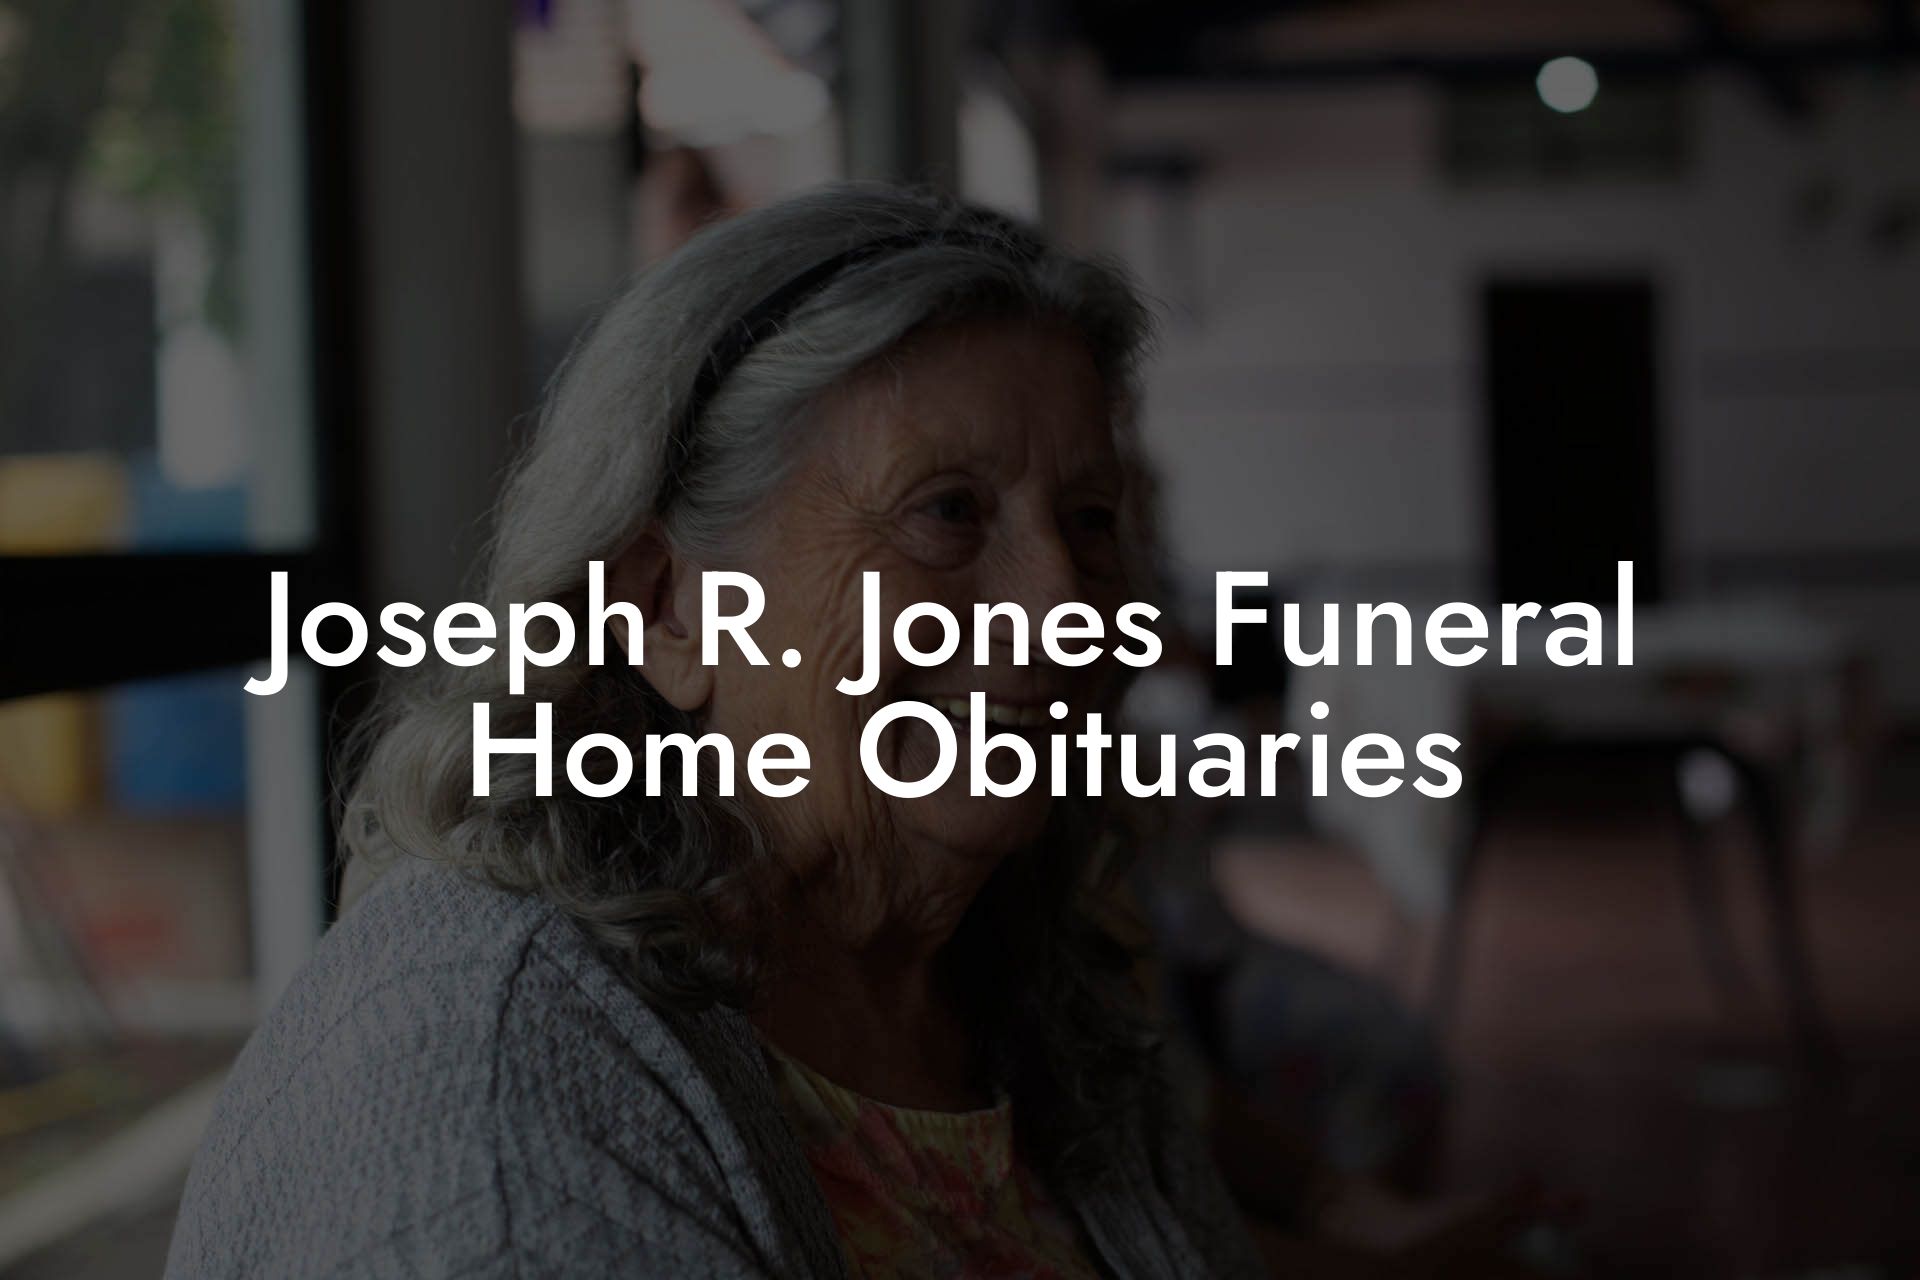 Joseph R. Jones Funeral Home Obituaries